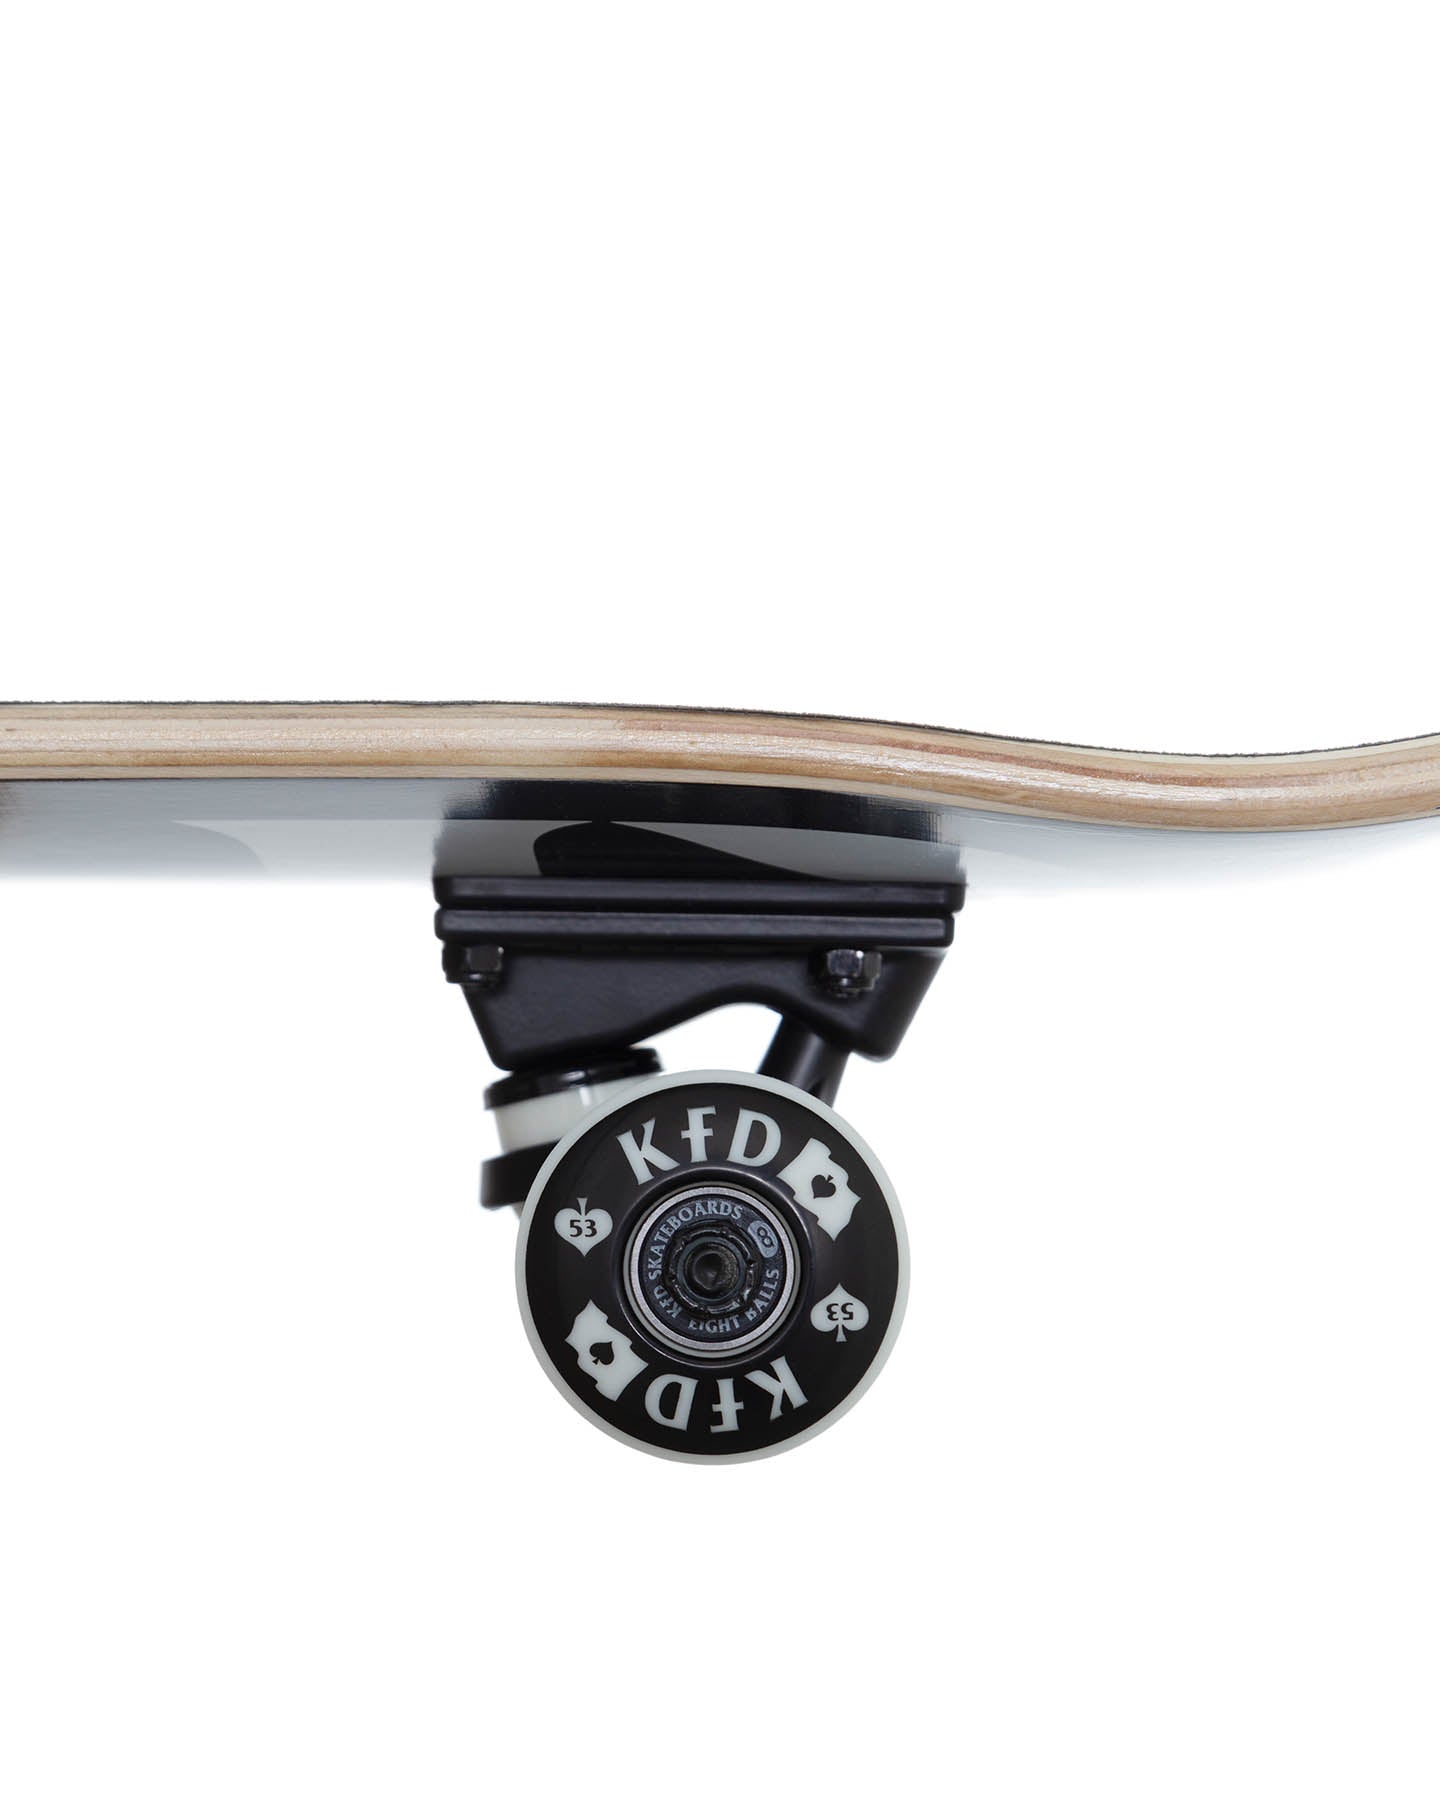 Kfd Complete Skateboard Young Gunz Flagship Black - 7.75"